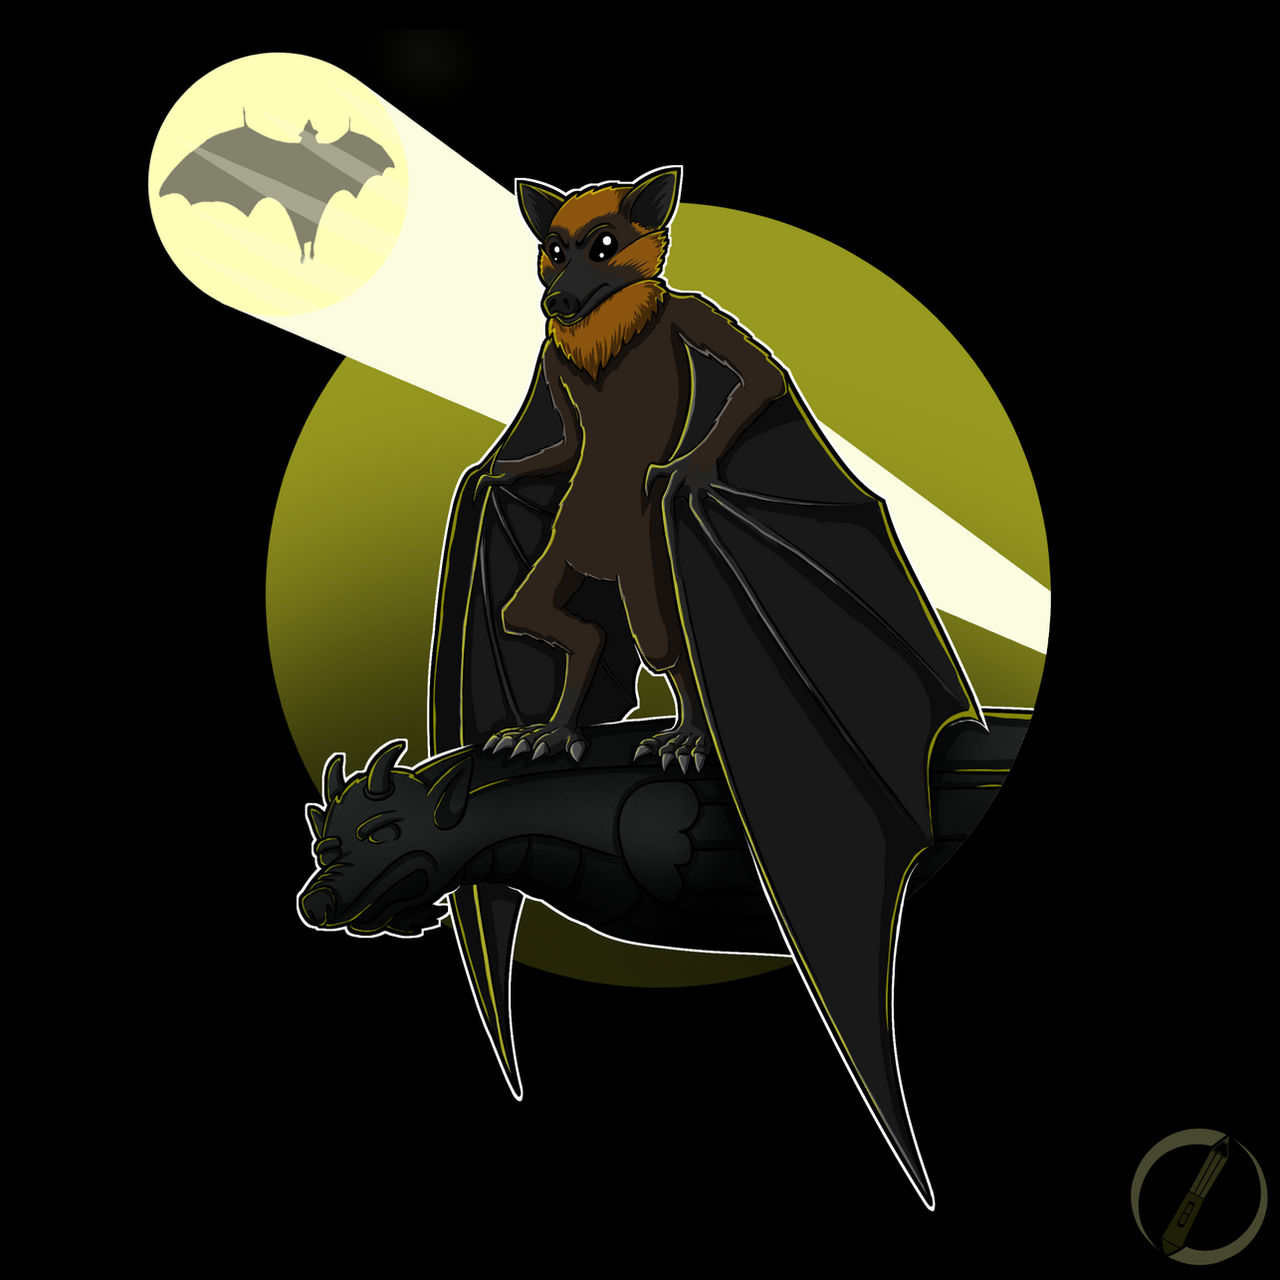 Flying Fox (Batman) by grdobina on DeviantArt